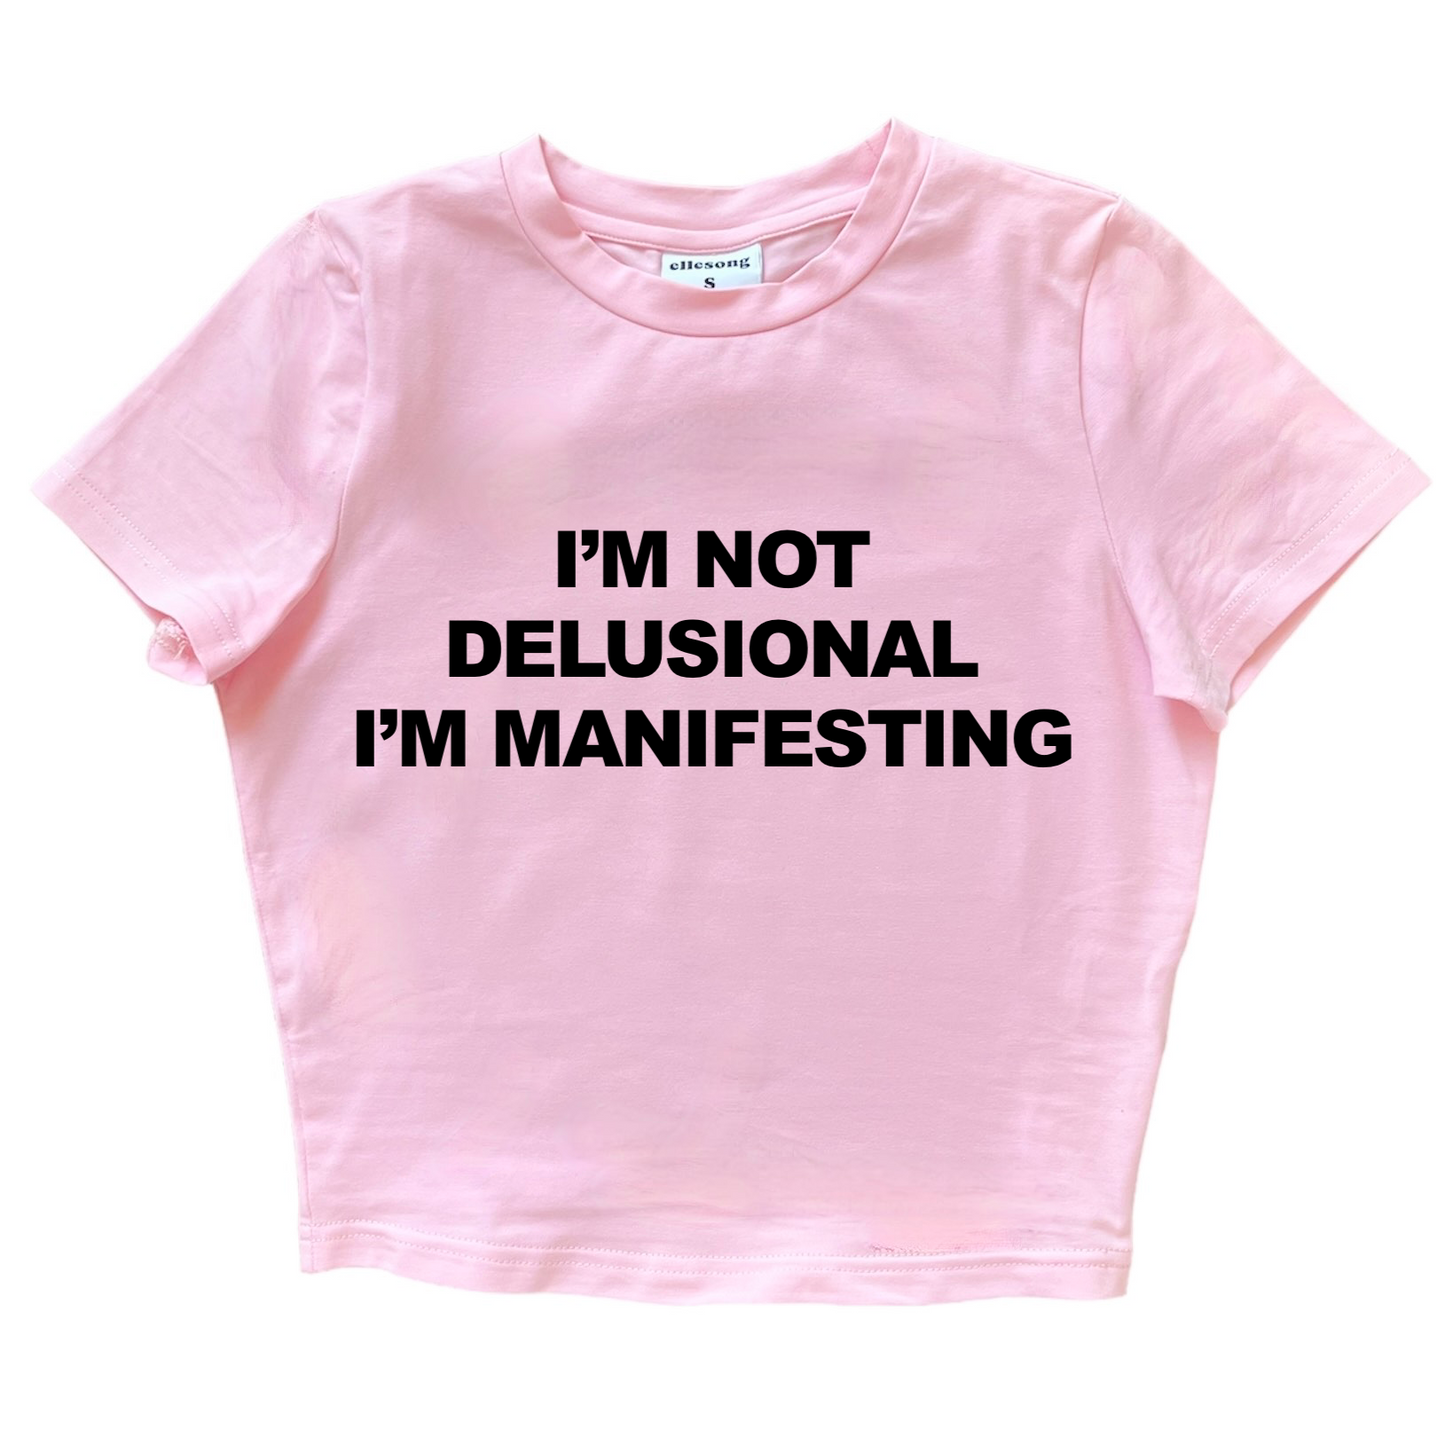 I’m Not Delusional I’m Manifesting Baby Tee